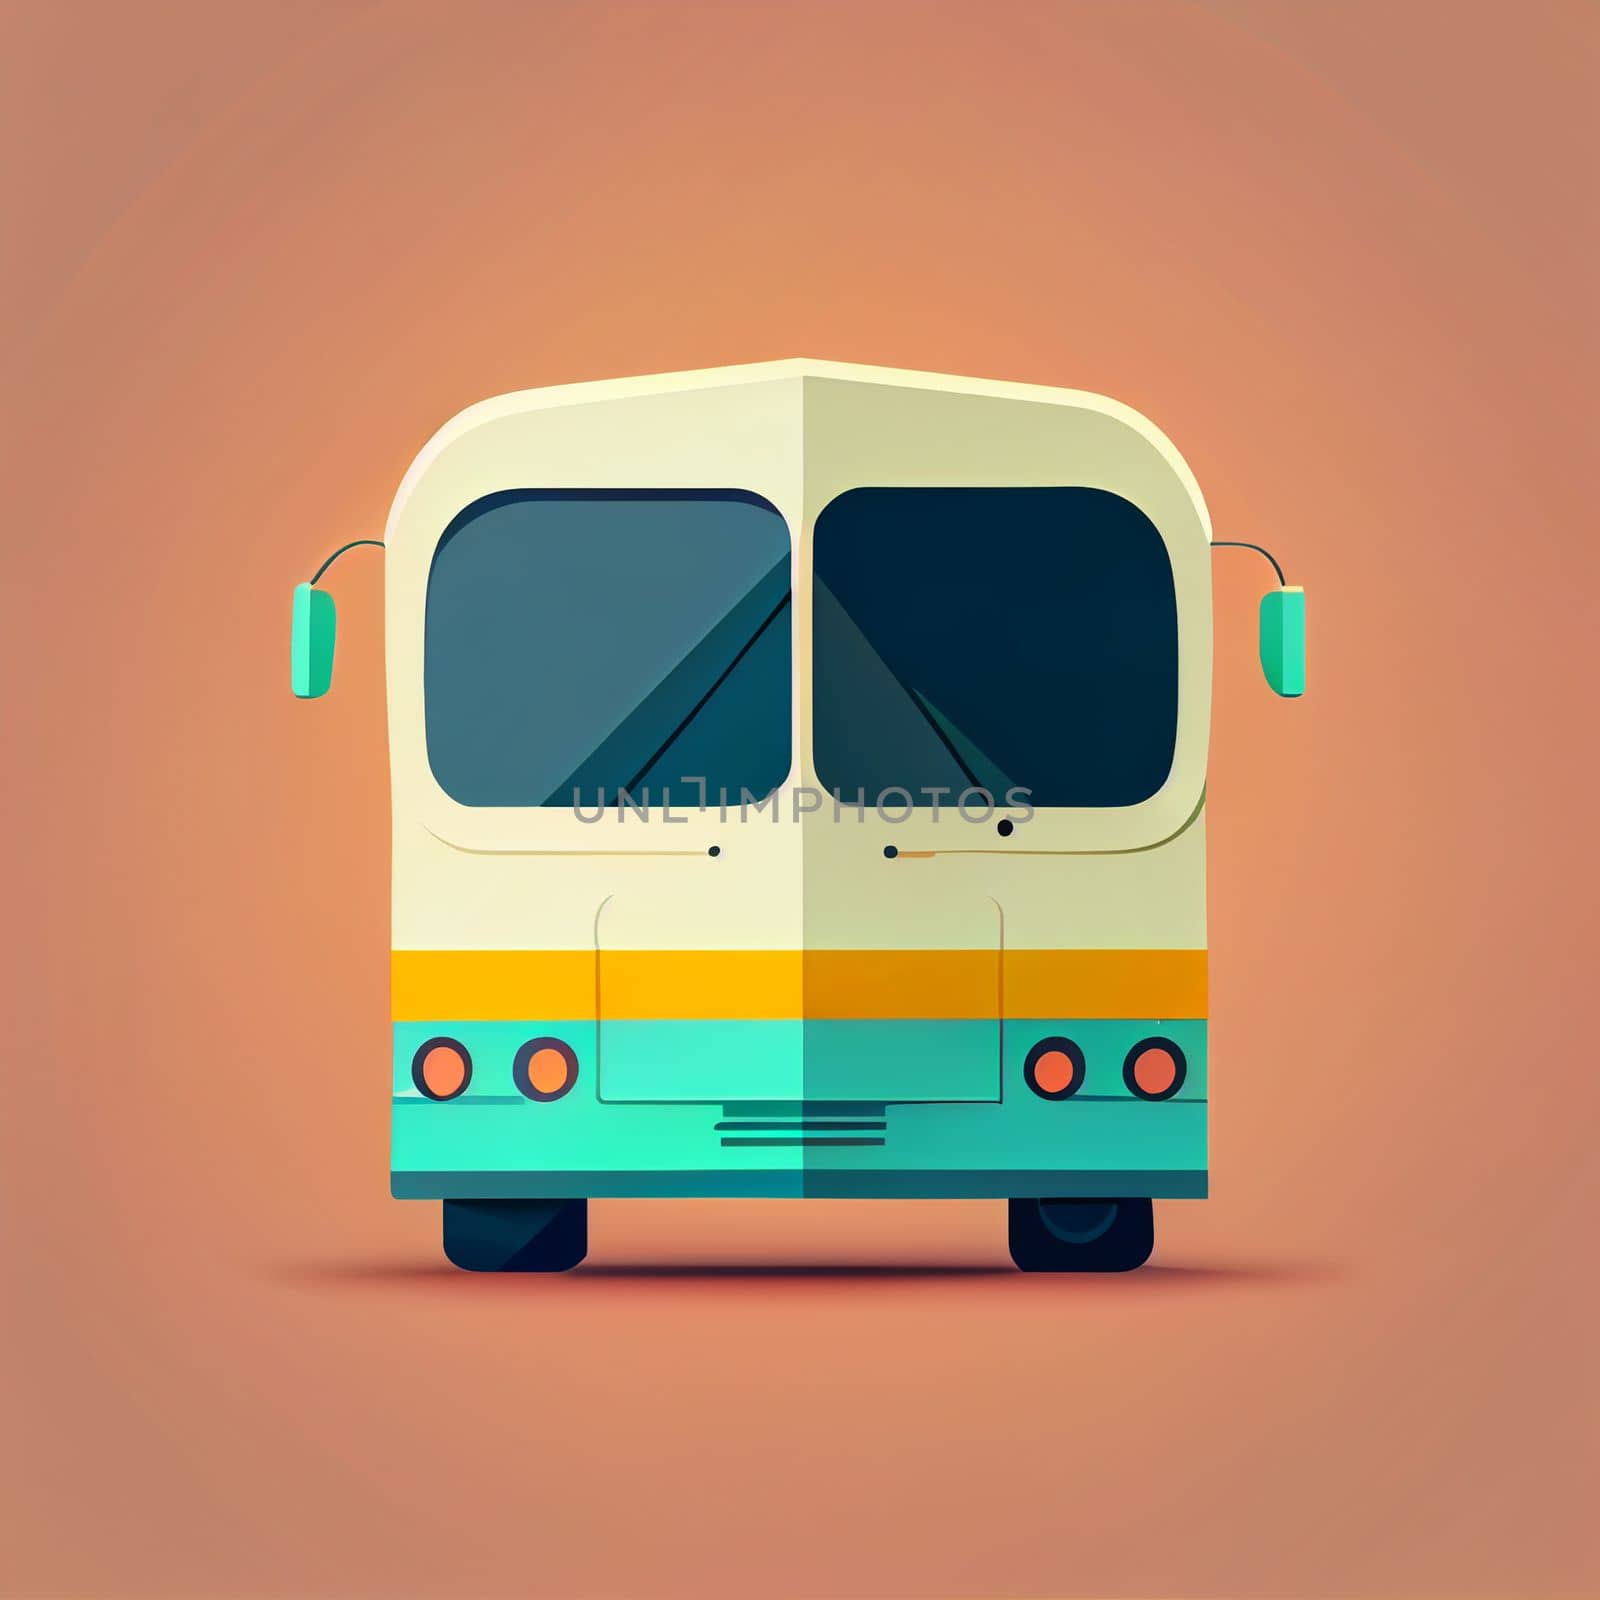 Modern flat design of Transport public transportable bus for transportation in city. illustration flat style.